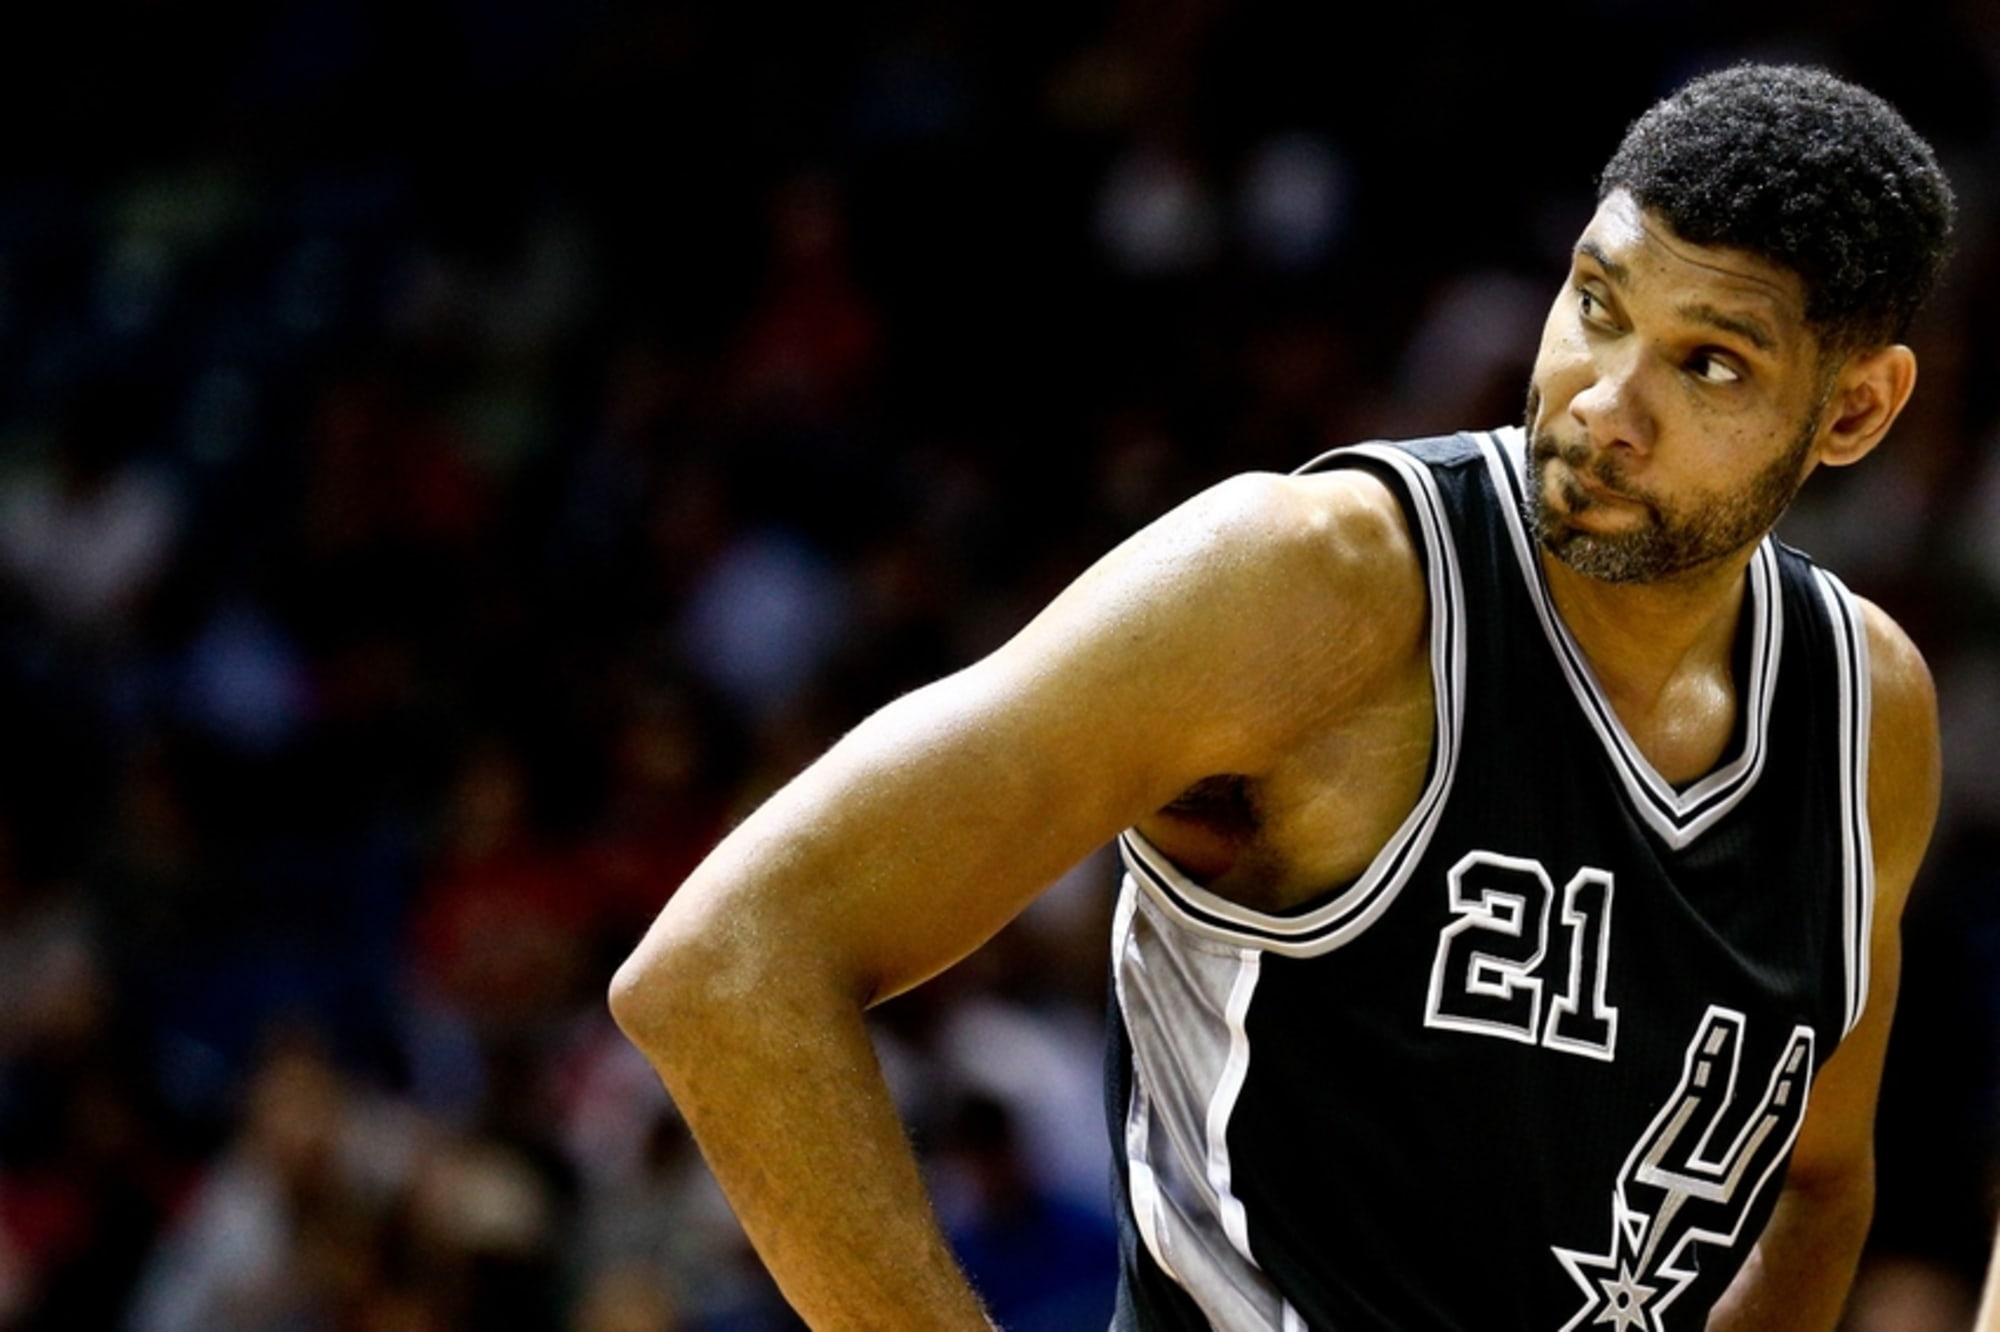 San Antonio Spurs' Tim Duncan (21) shoots over Washington Wizards